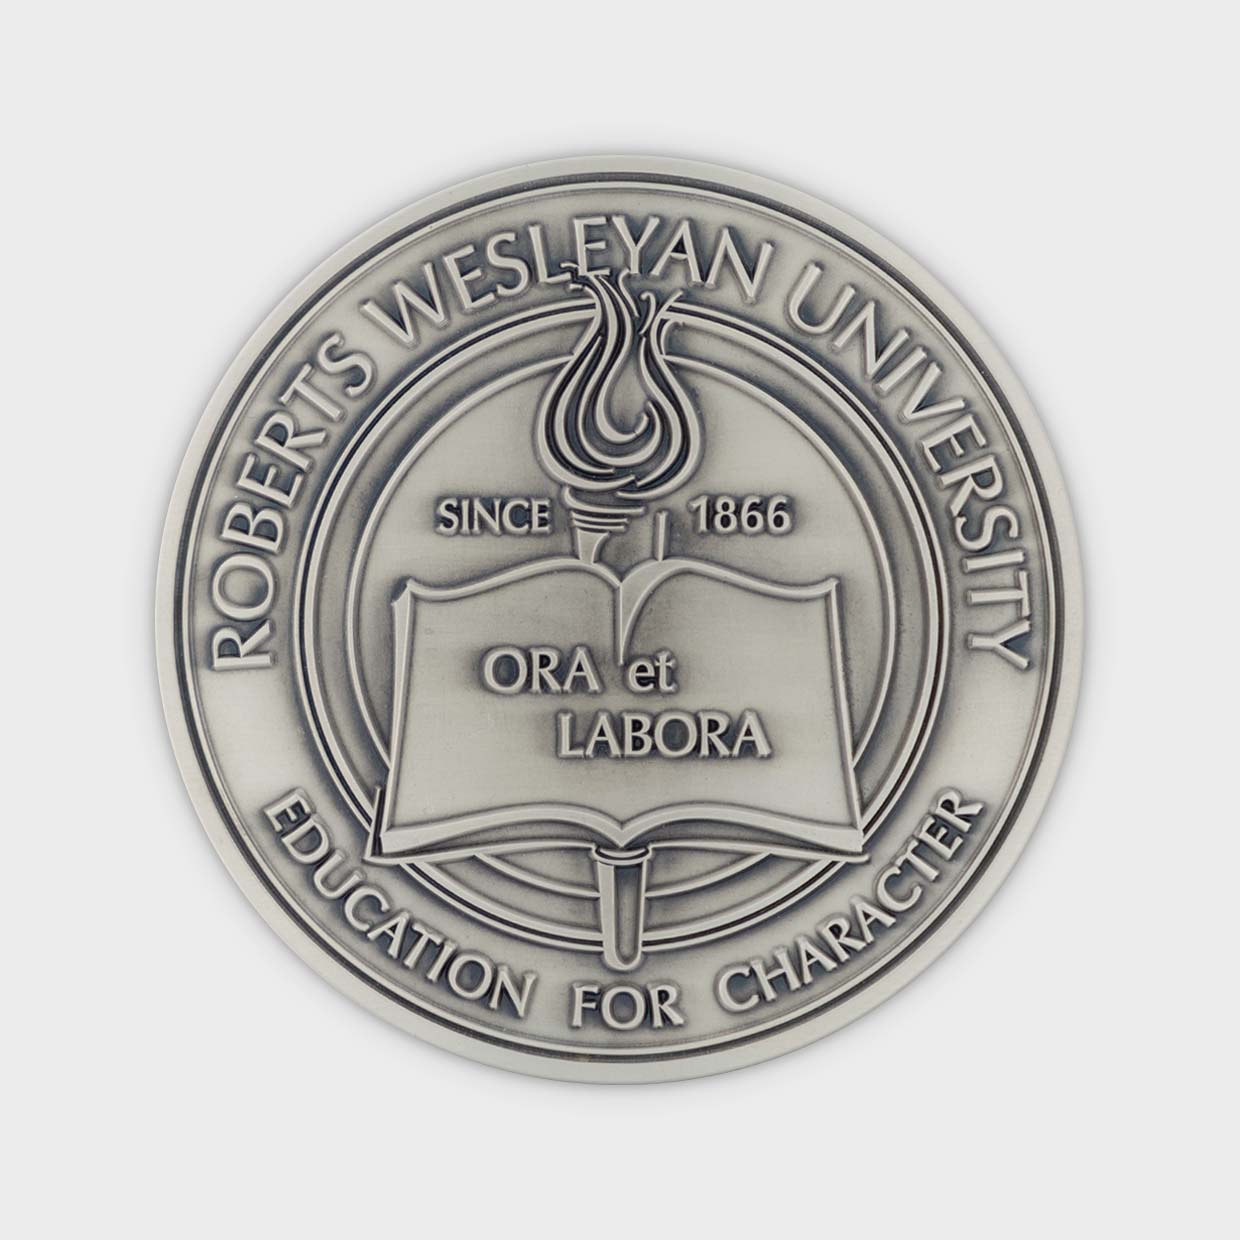 Roberts Wesleyan University Chain of Office Medal